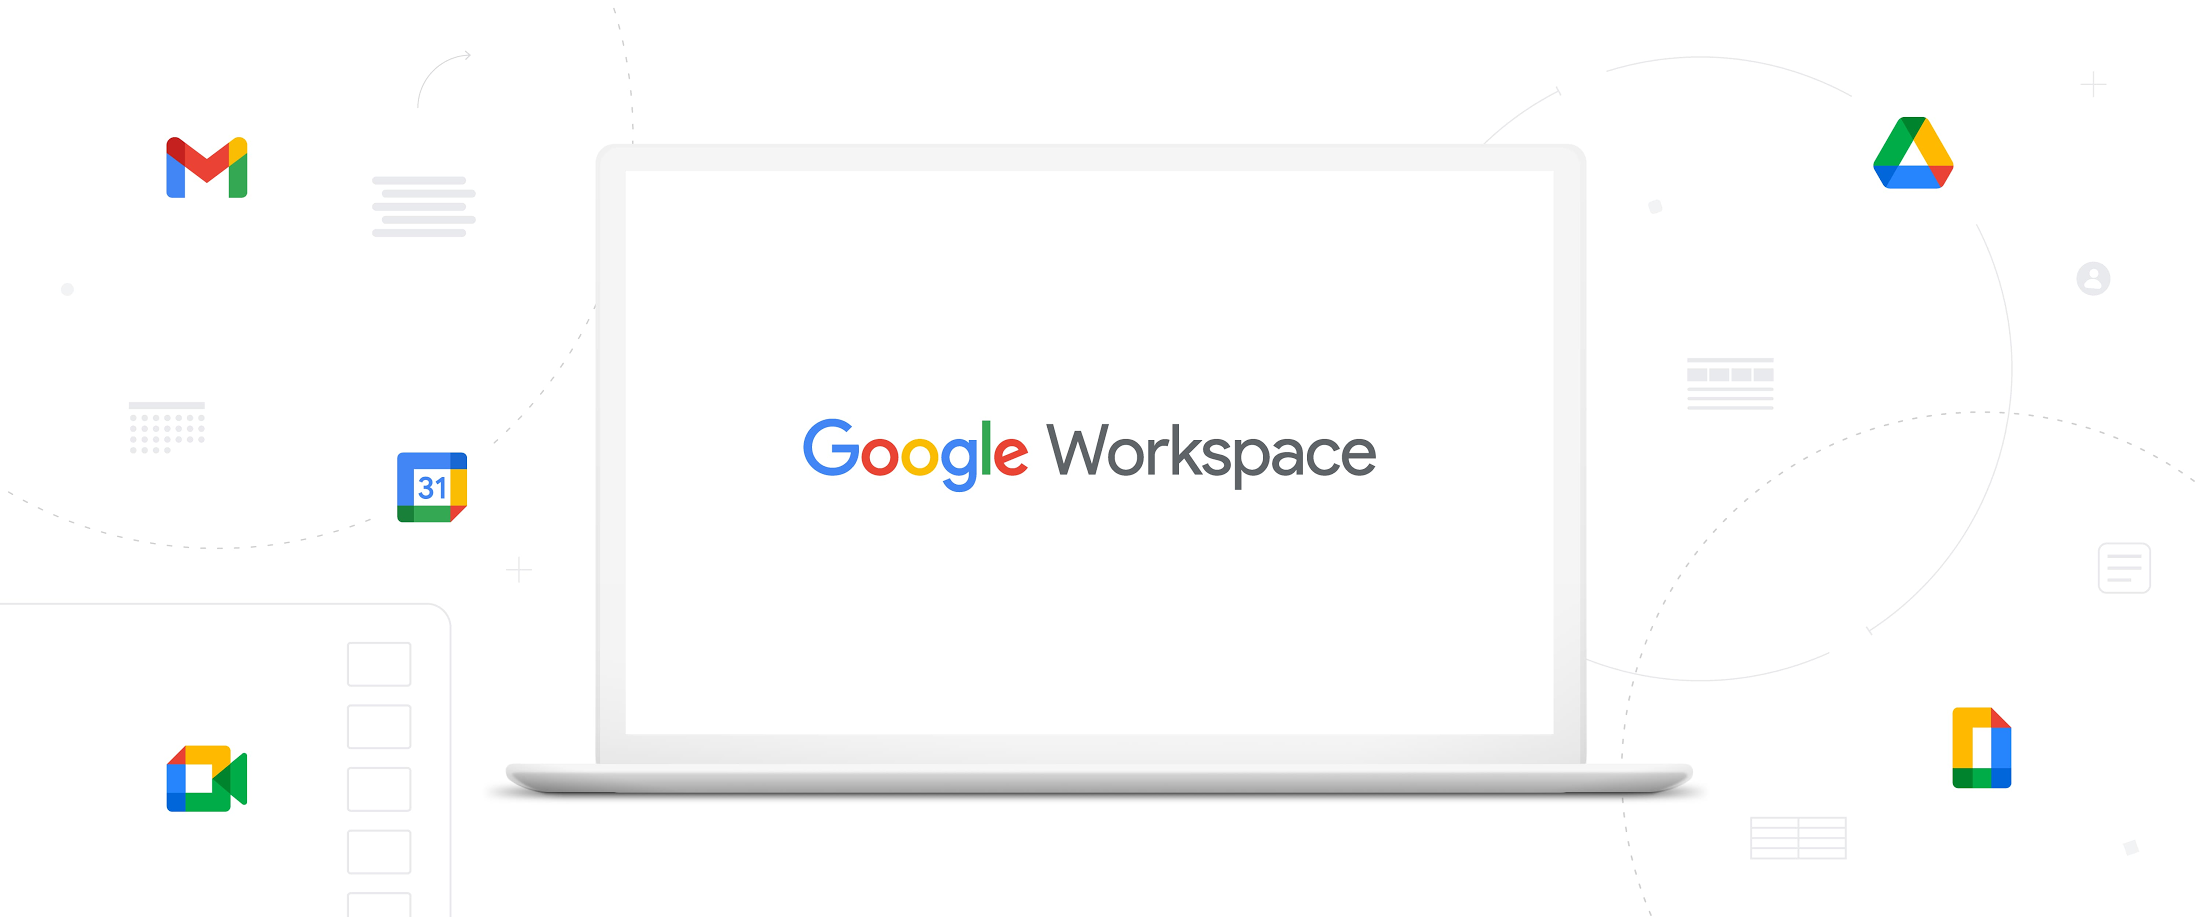 Google Workspace Features Update Summary: November 2020